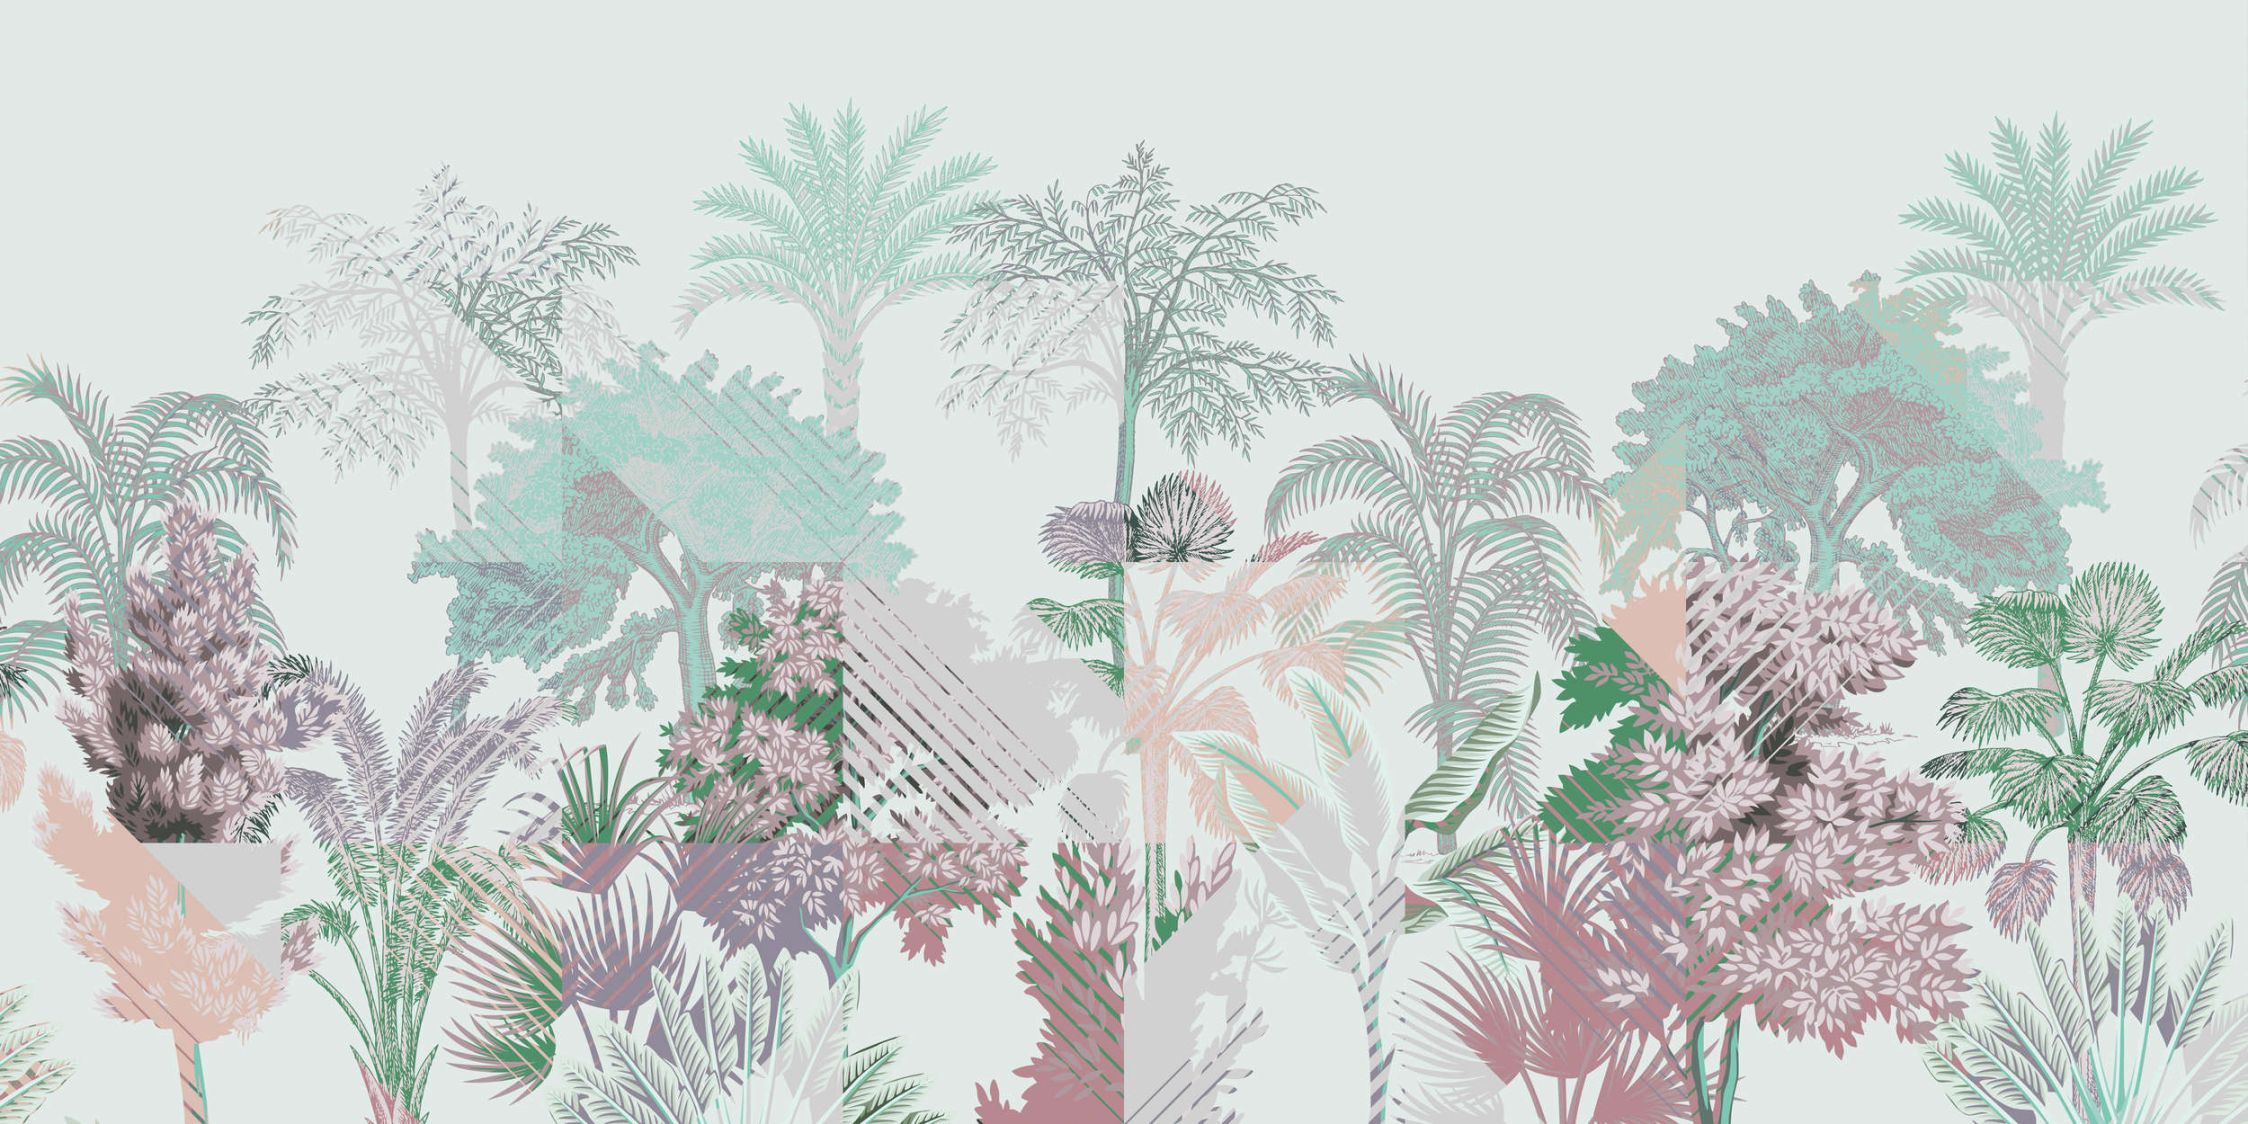             Digital behang »esplanade 1« - jungle patchwork met struiken - groen, roze | Gladde, licht parelmoerglanzende vliesstof
        